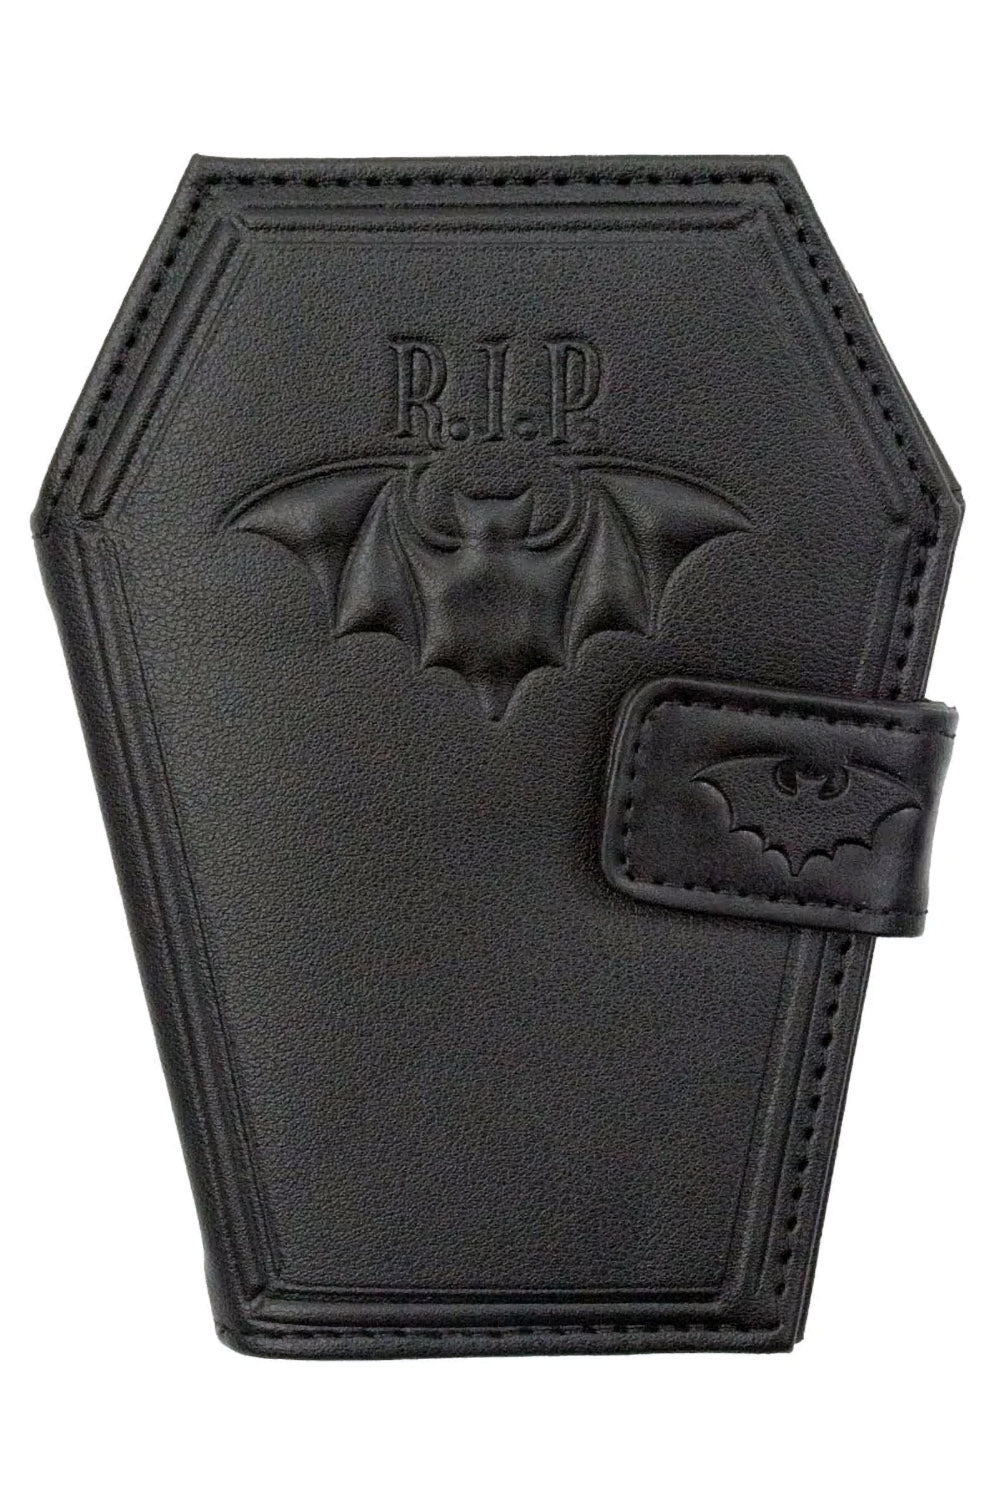 RIP Bat Embossed Coffin Wallet